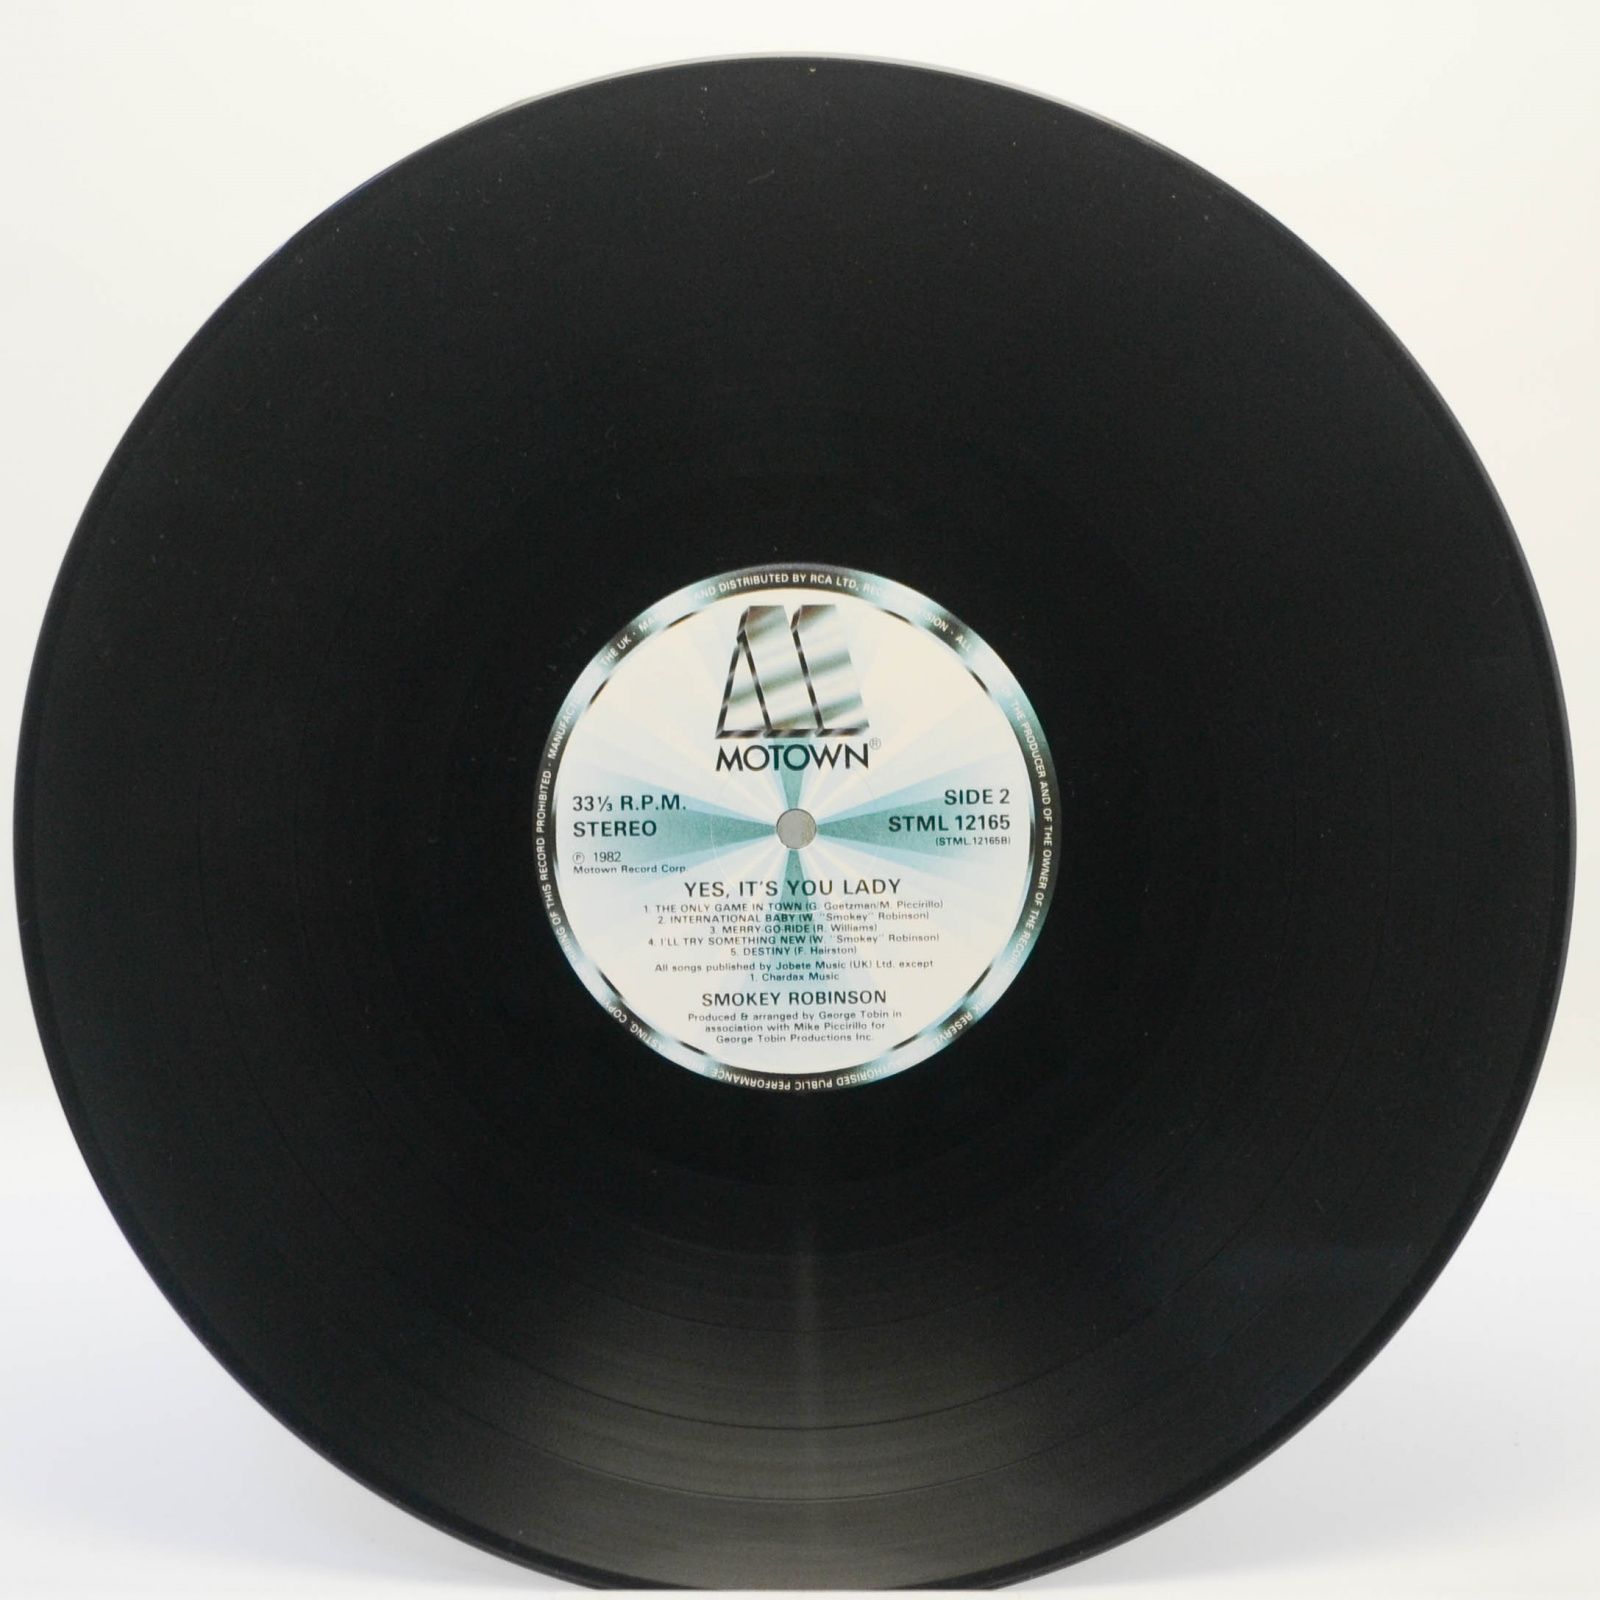 Smokey Robinson — Yes It's You Lady, 1982